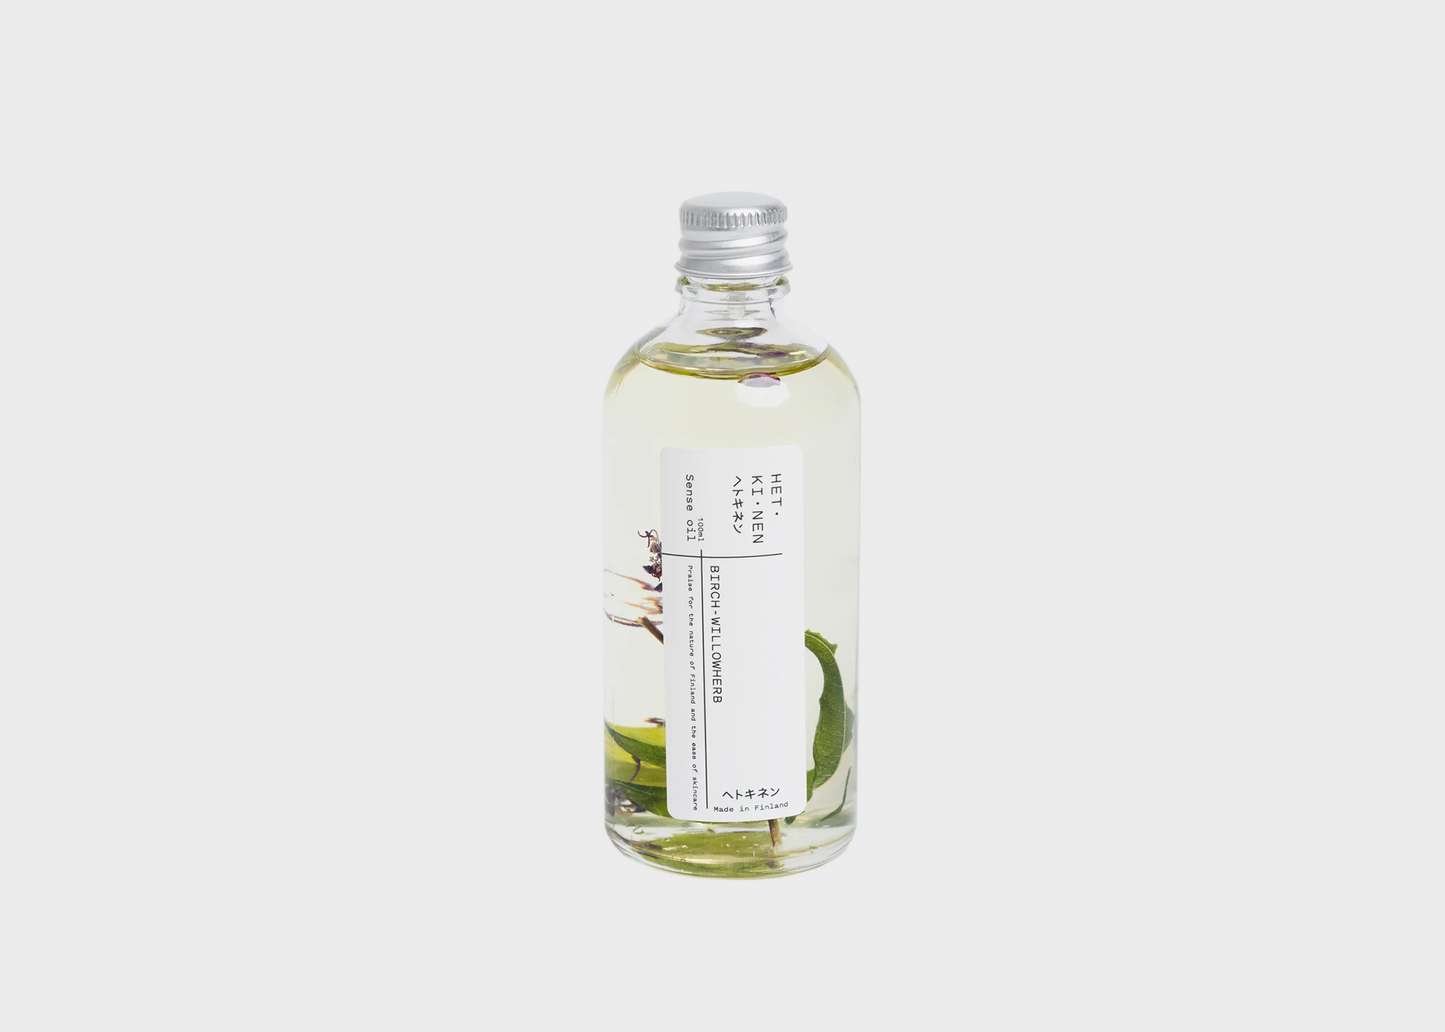 Hetkinen Sense Oil - Birch-Willowherb bottle with leaves in liquid